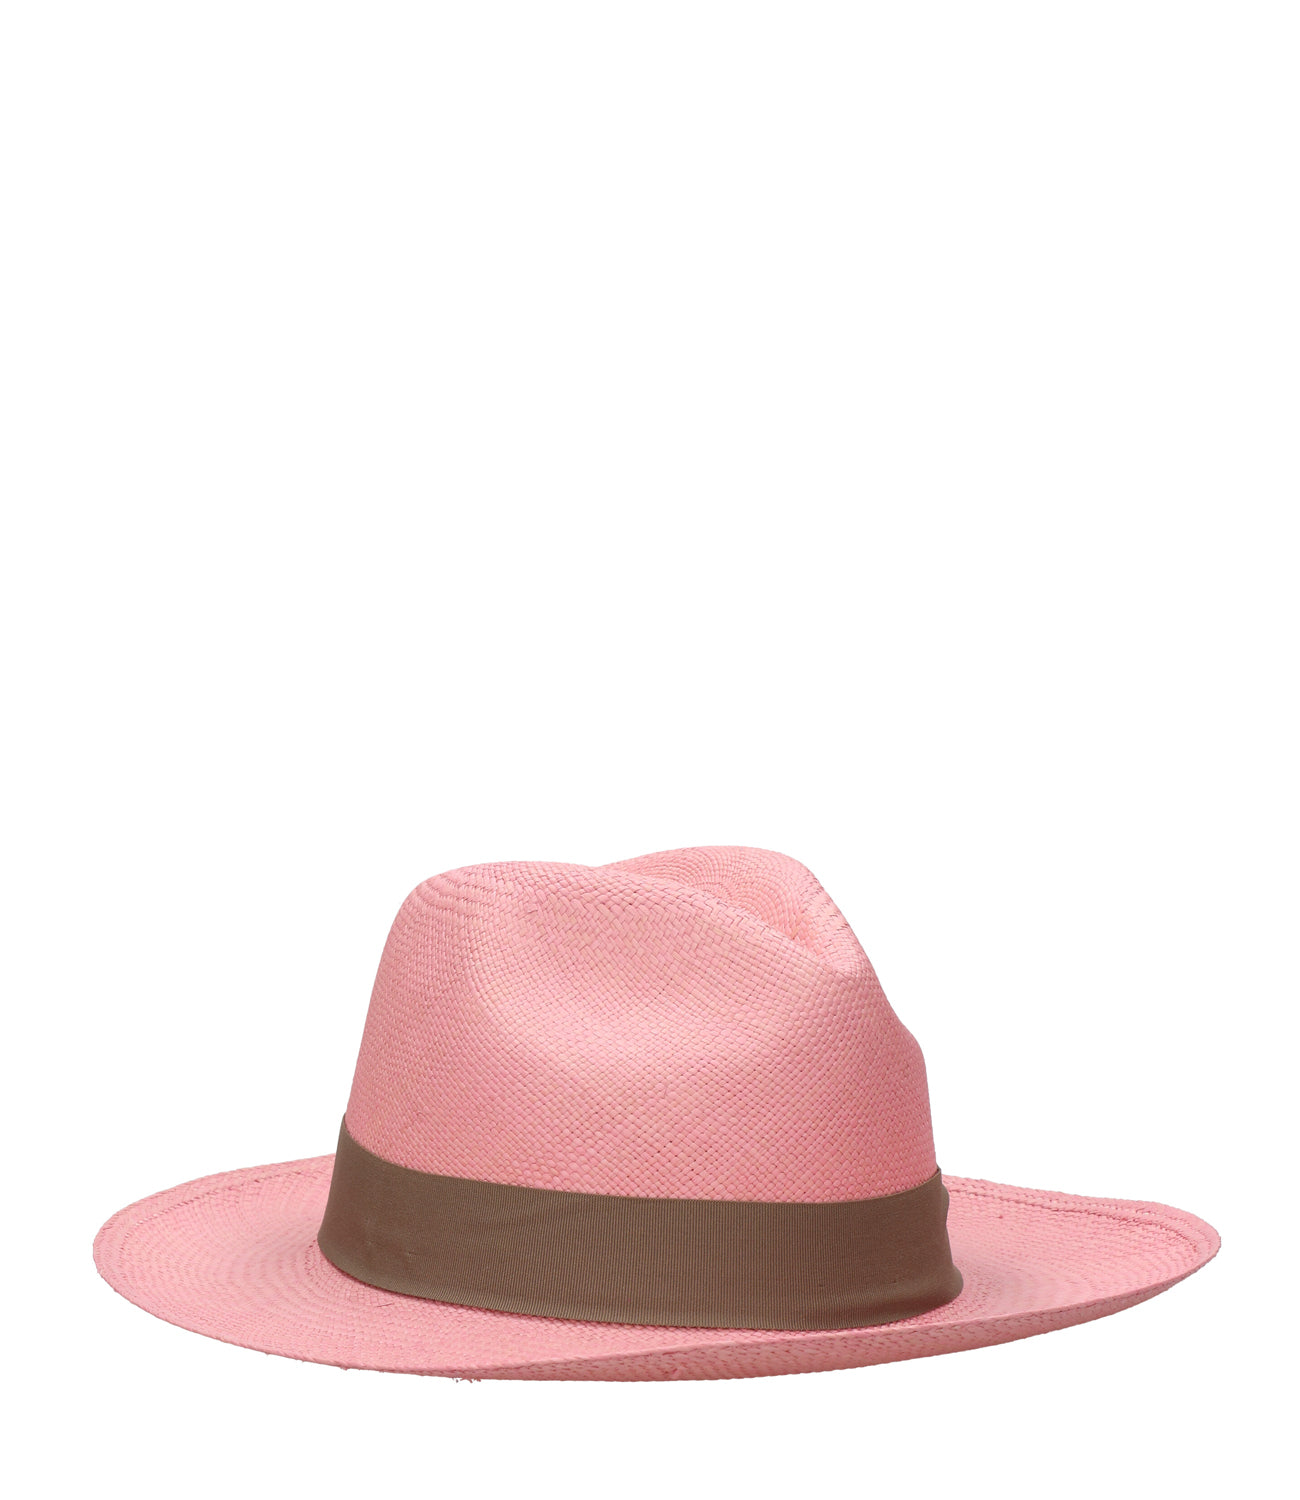 Frantic by Andrea Venturini | Pastel Pink Panama Hat